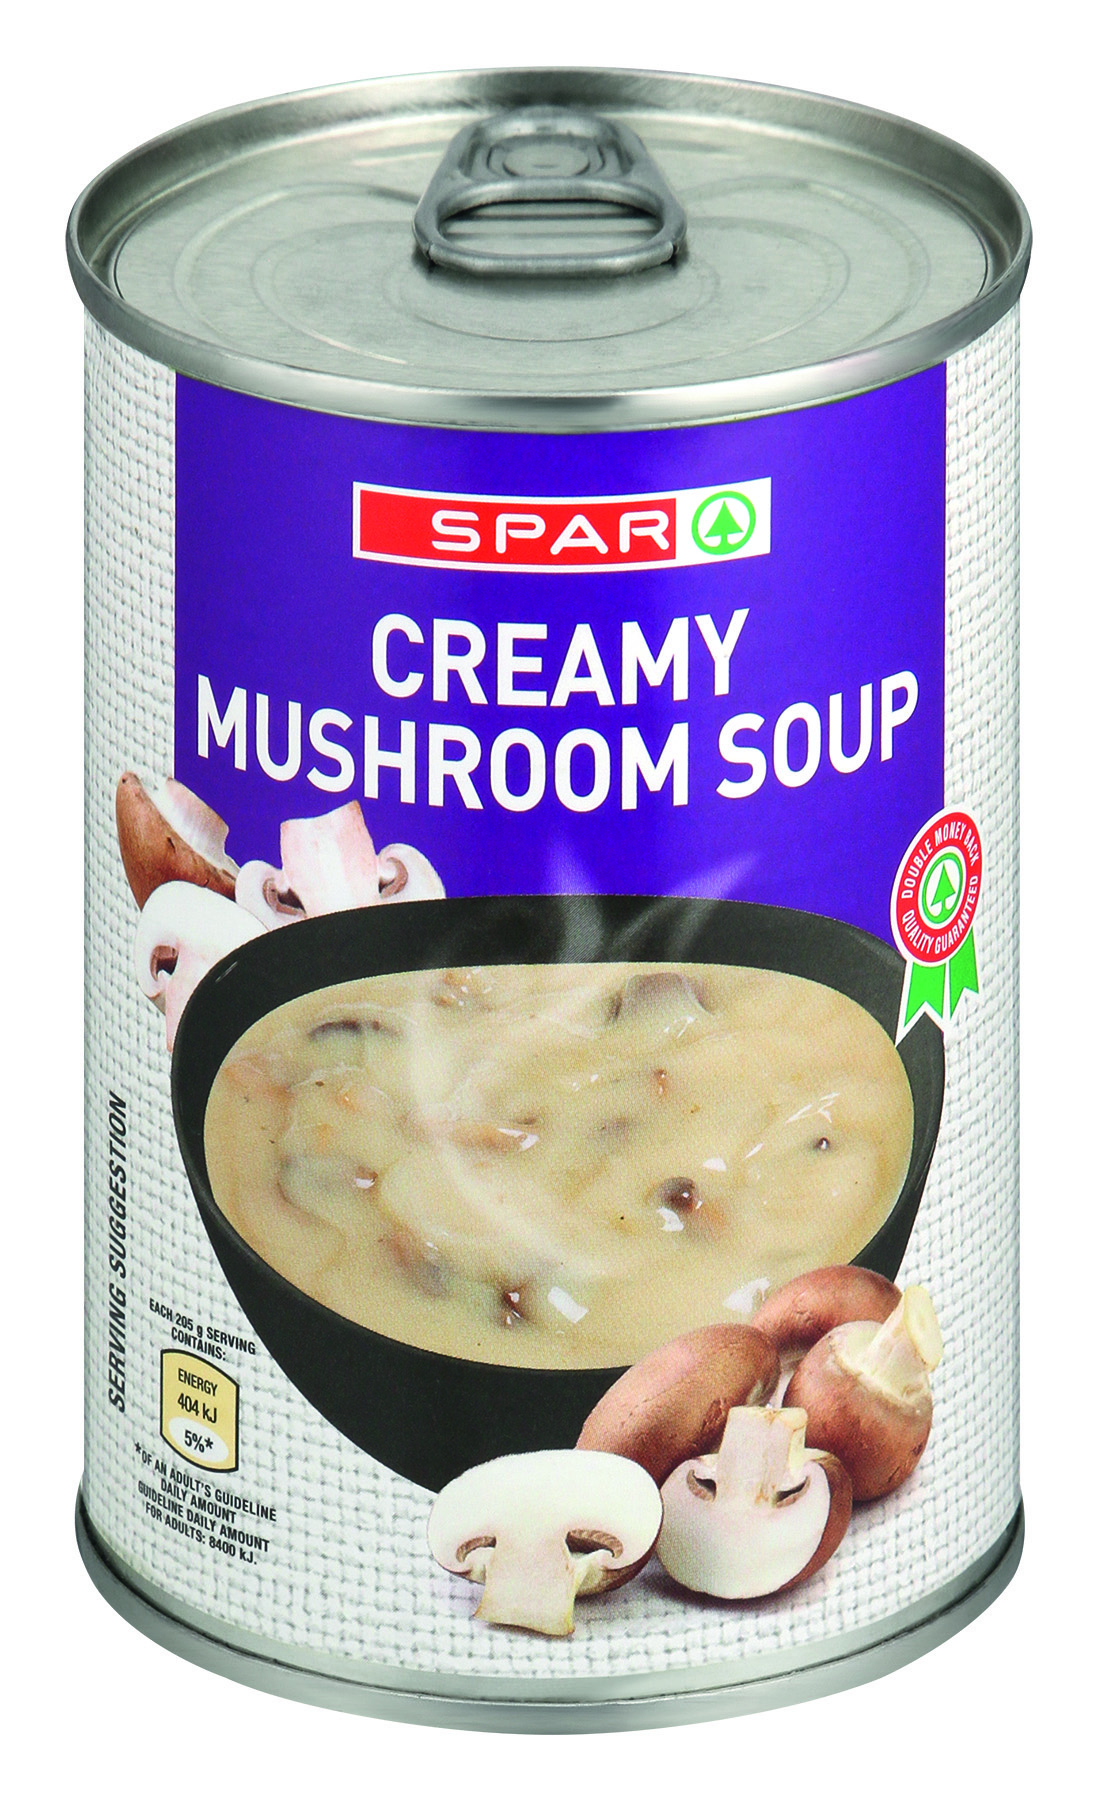 canned soup - creamy mushroom soup